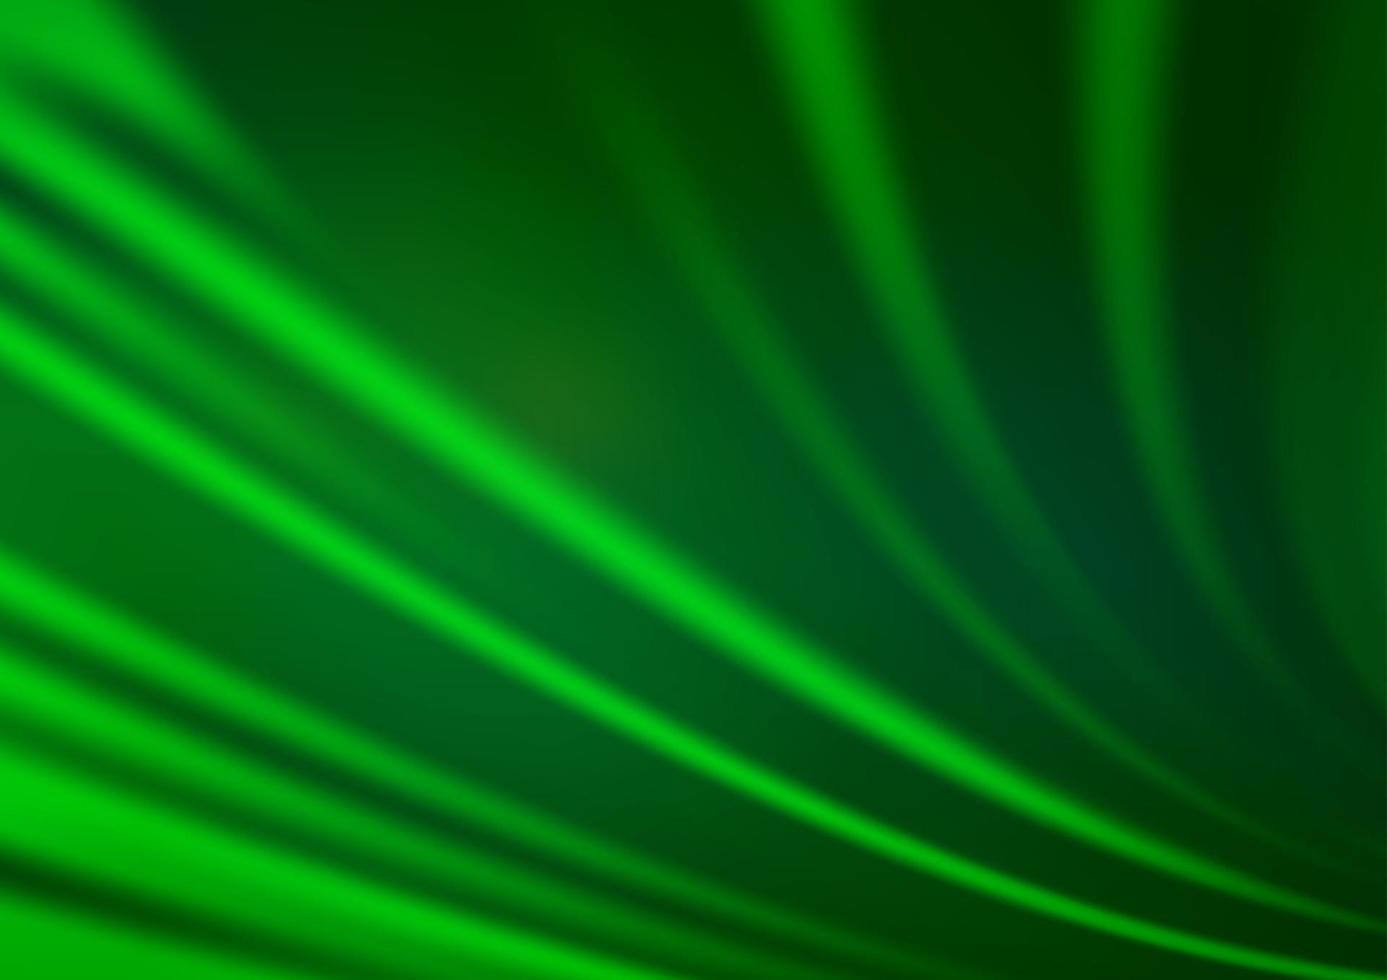 luz verde vetor abstrato bokeh padrão.